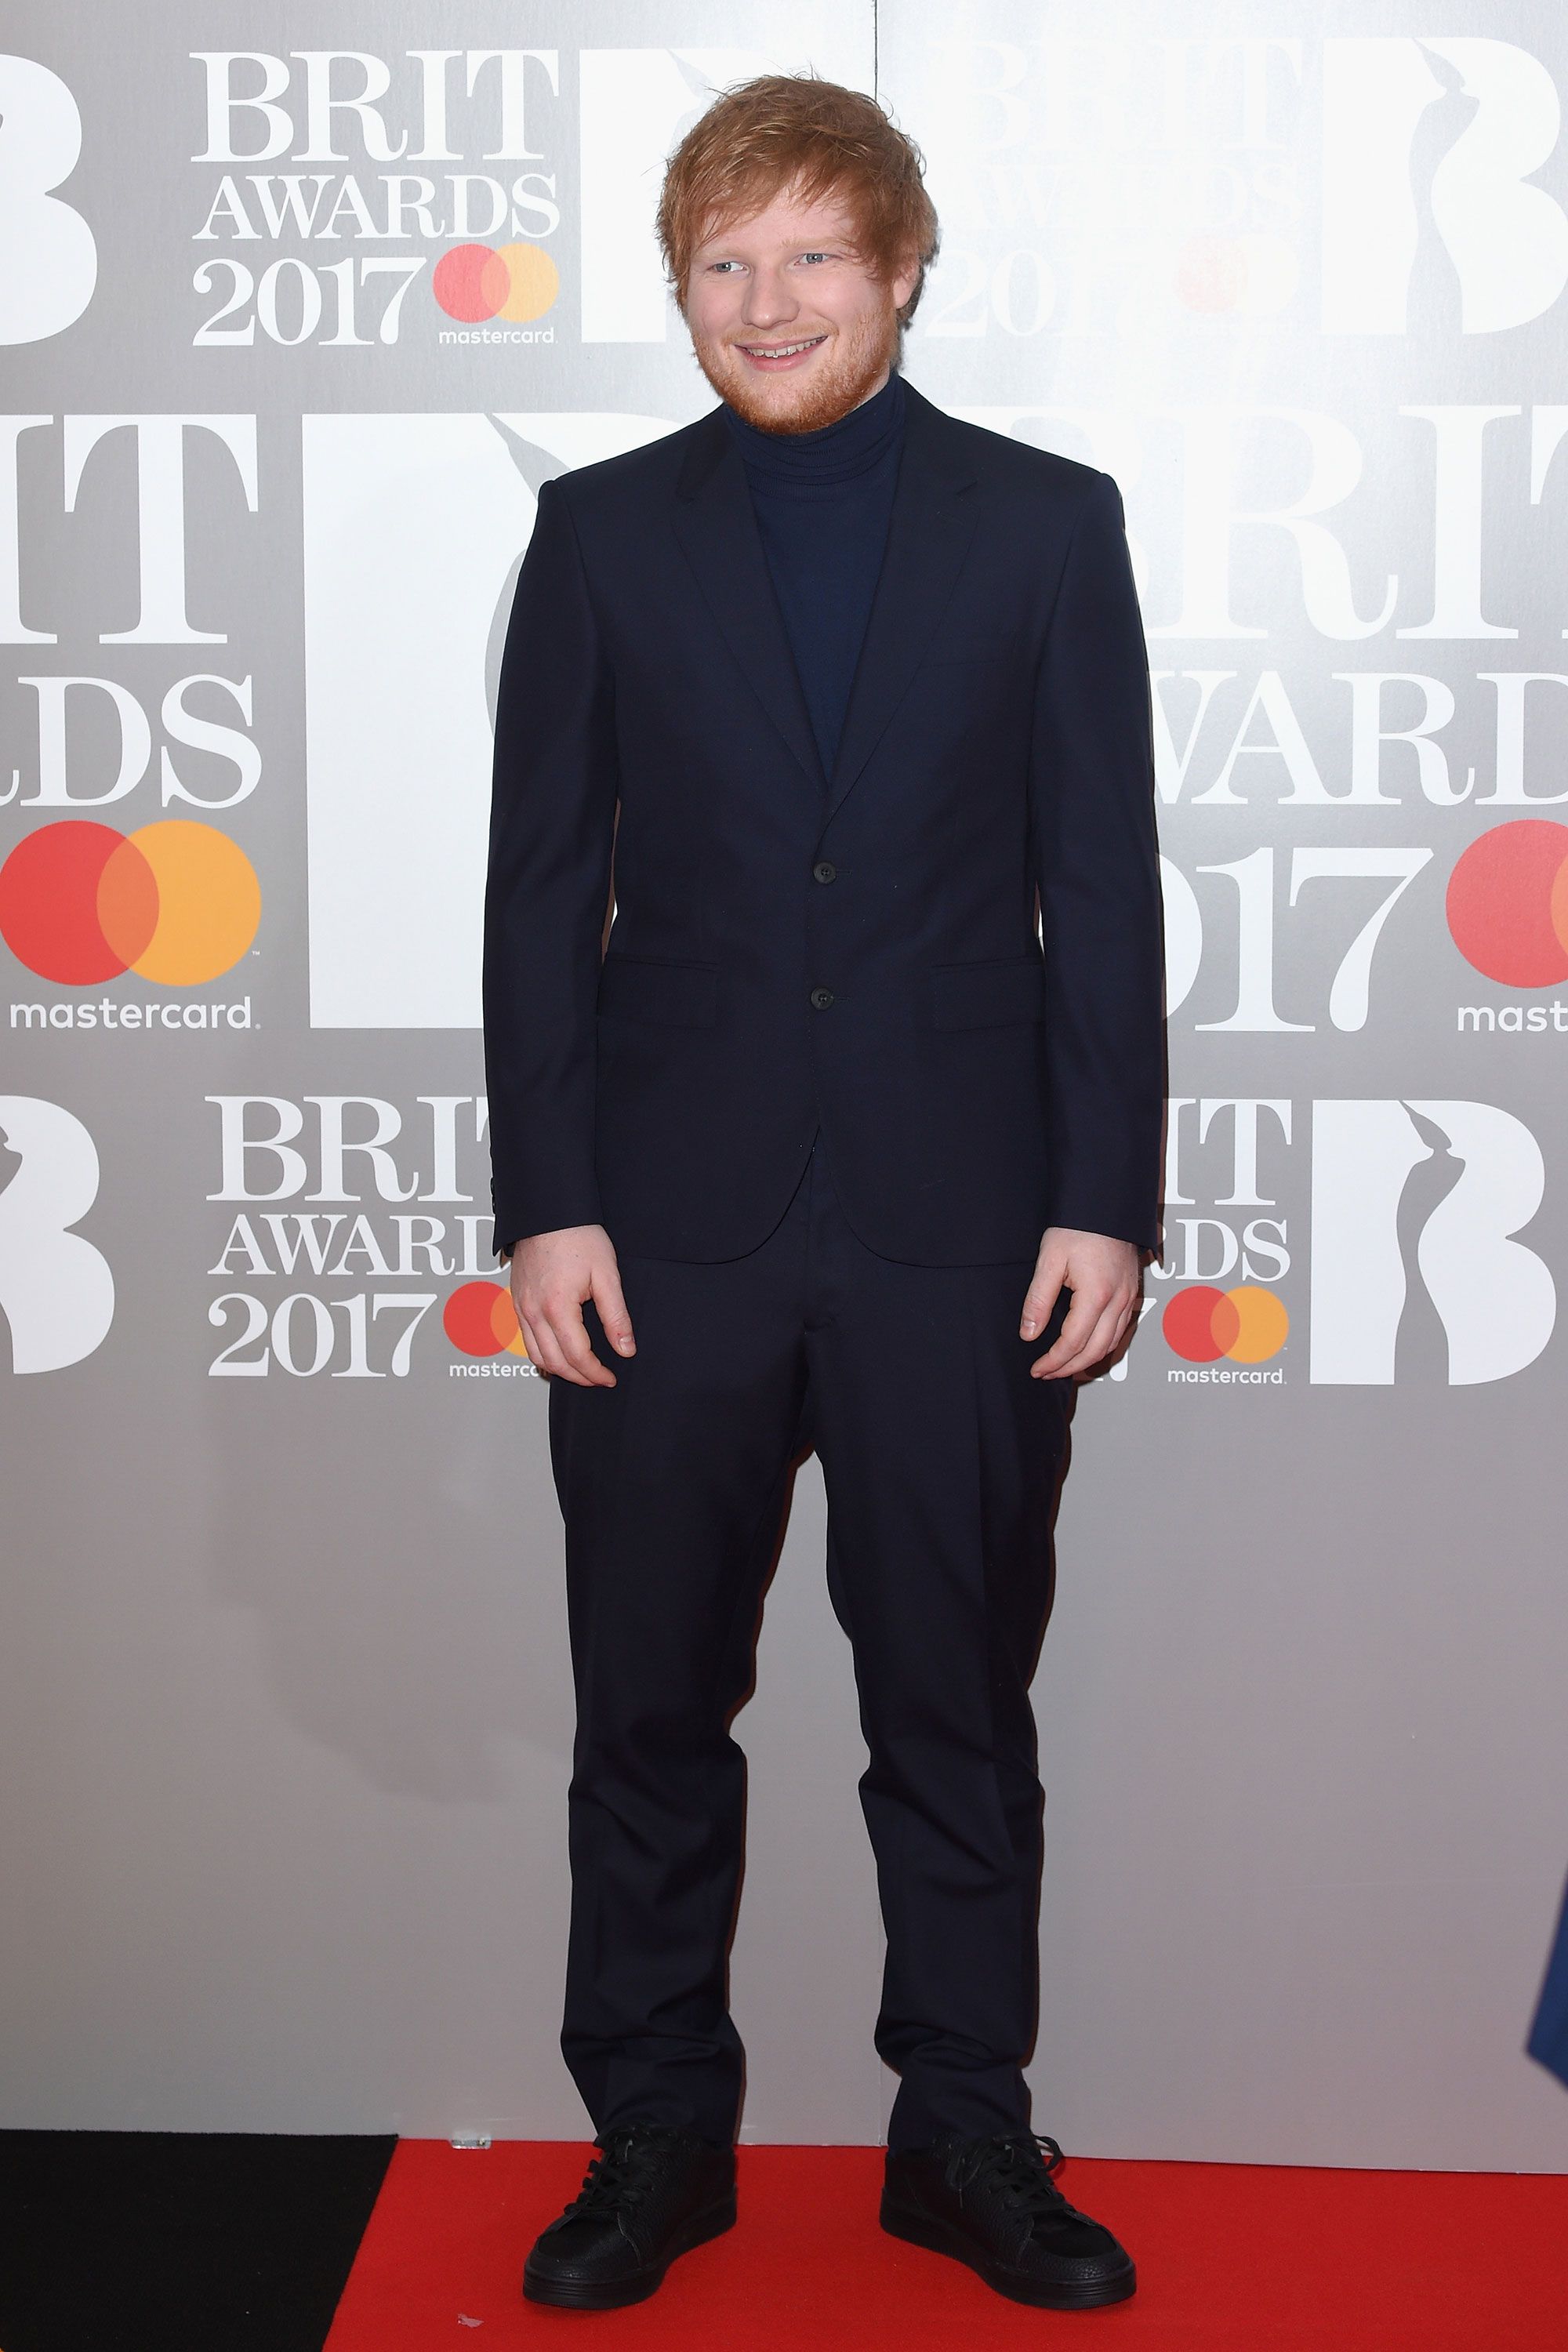 Brit Awards 2017 red carpet pictures